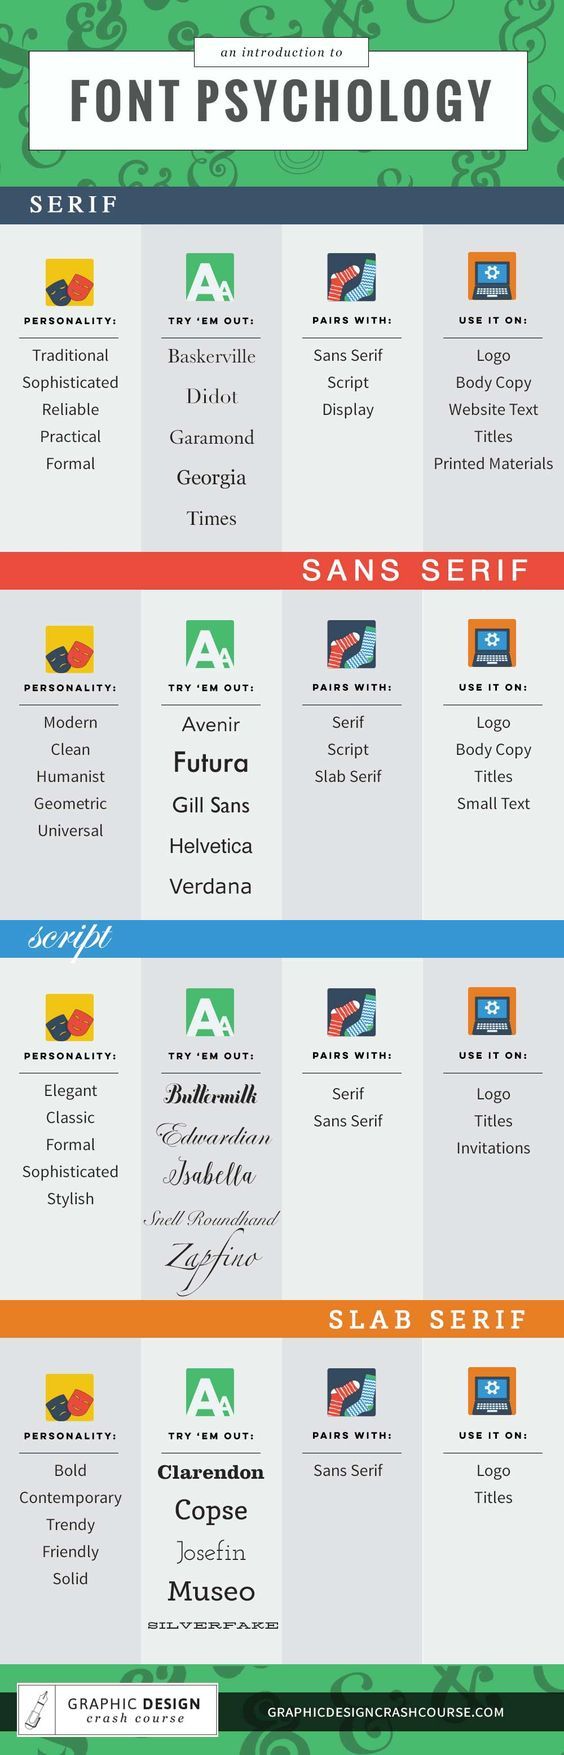 Design Guide - Choosing fonts for your design